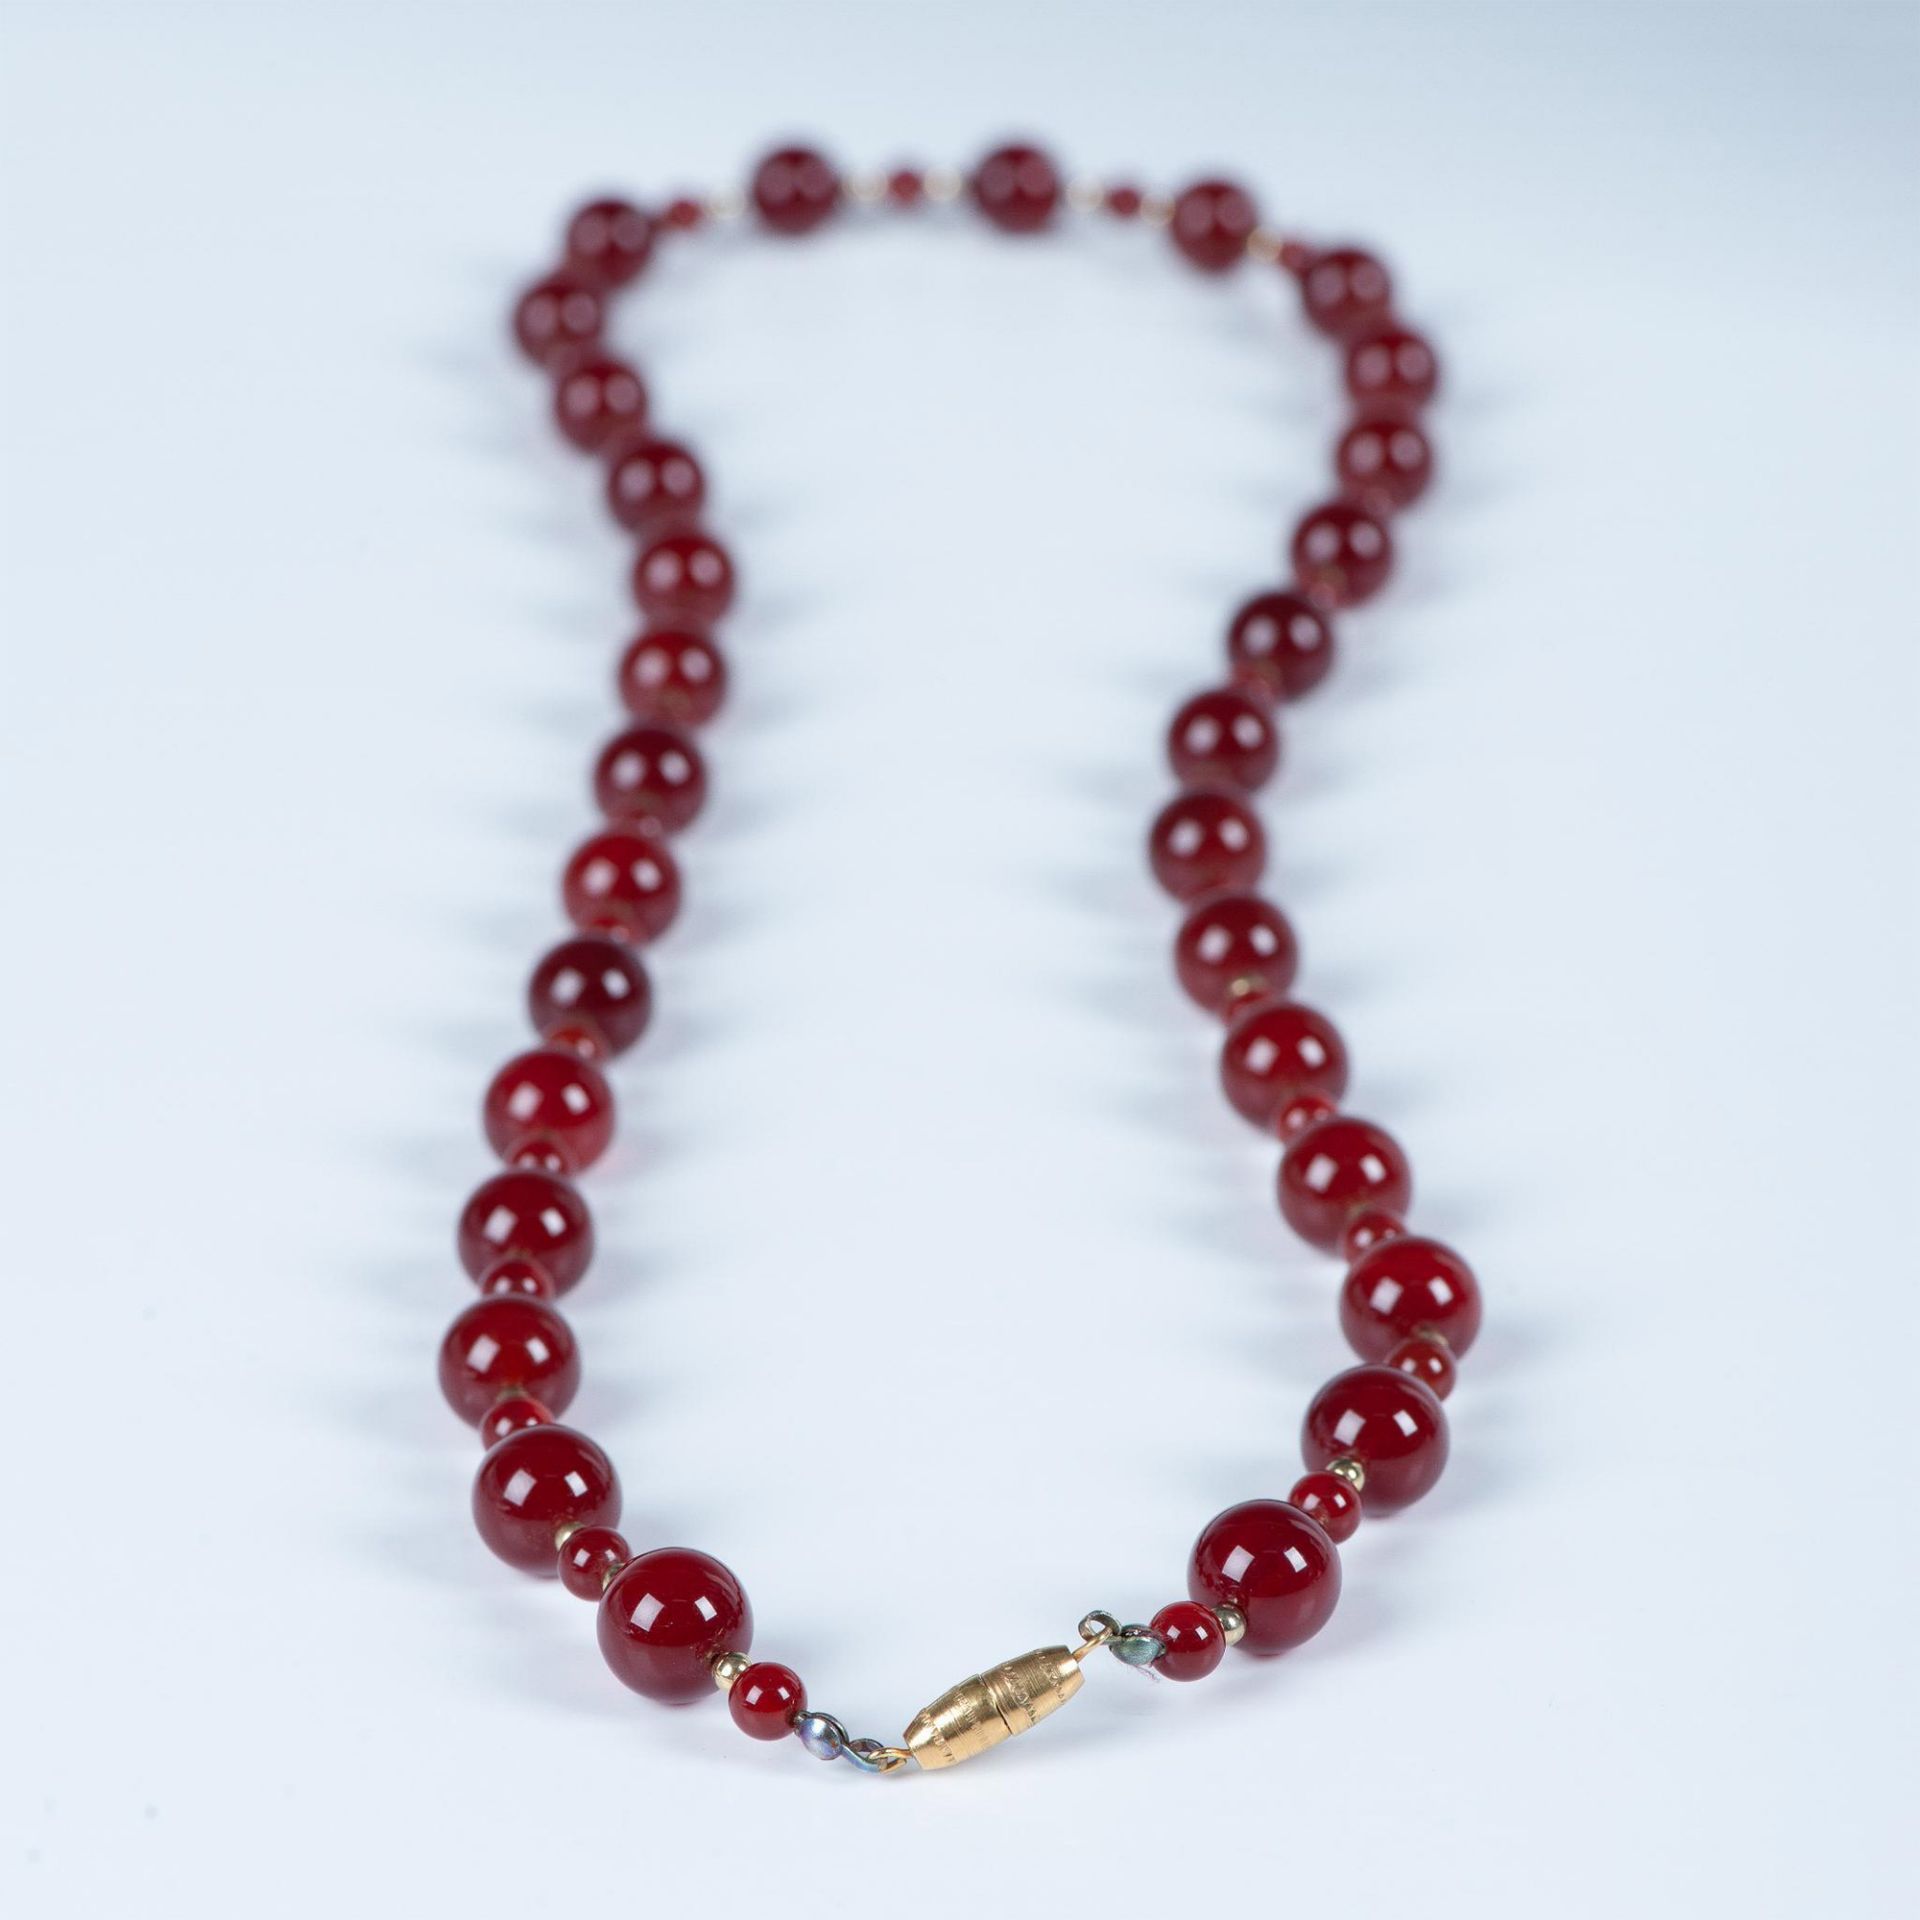 Beautiful Carnelian Beaded Necklace - Image 4 of 6